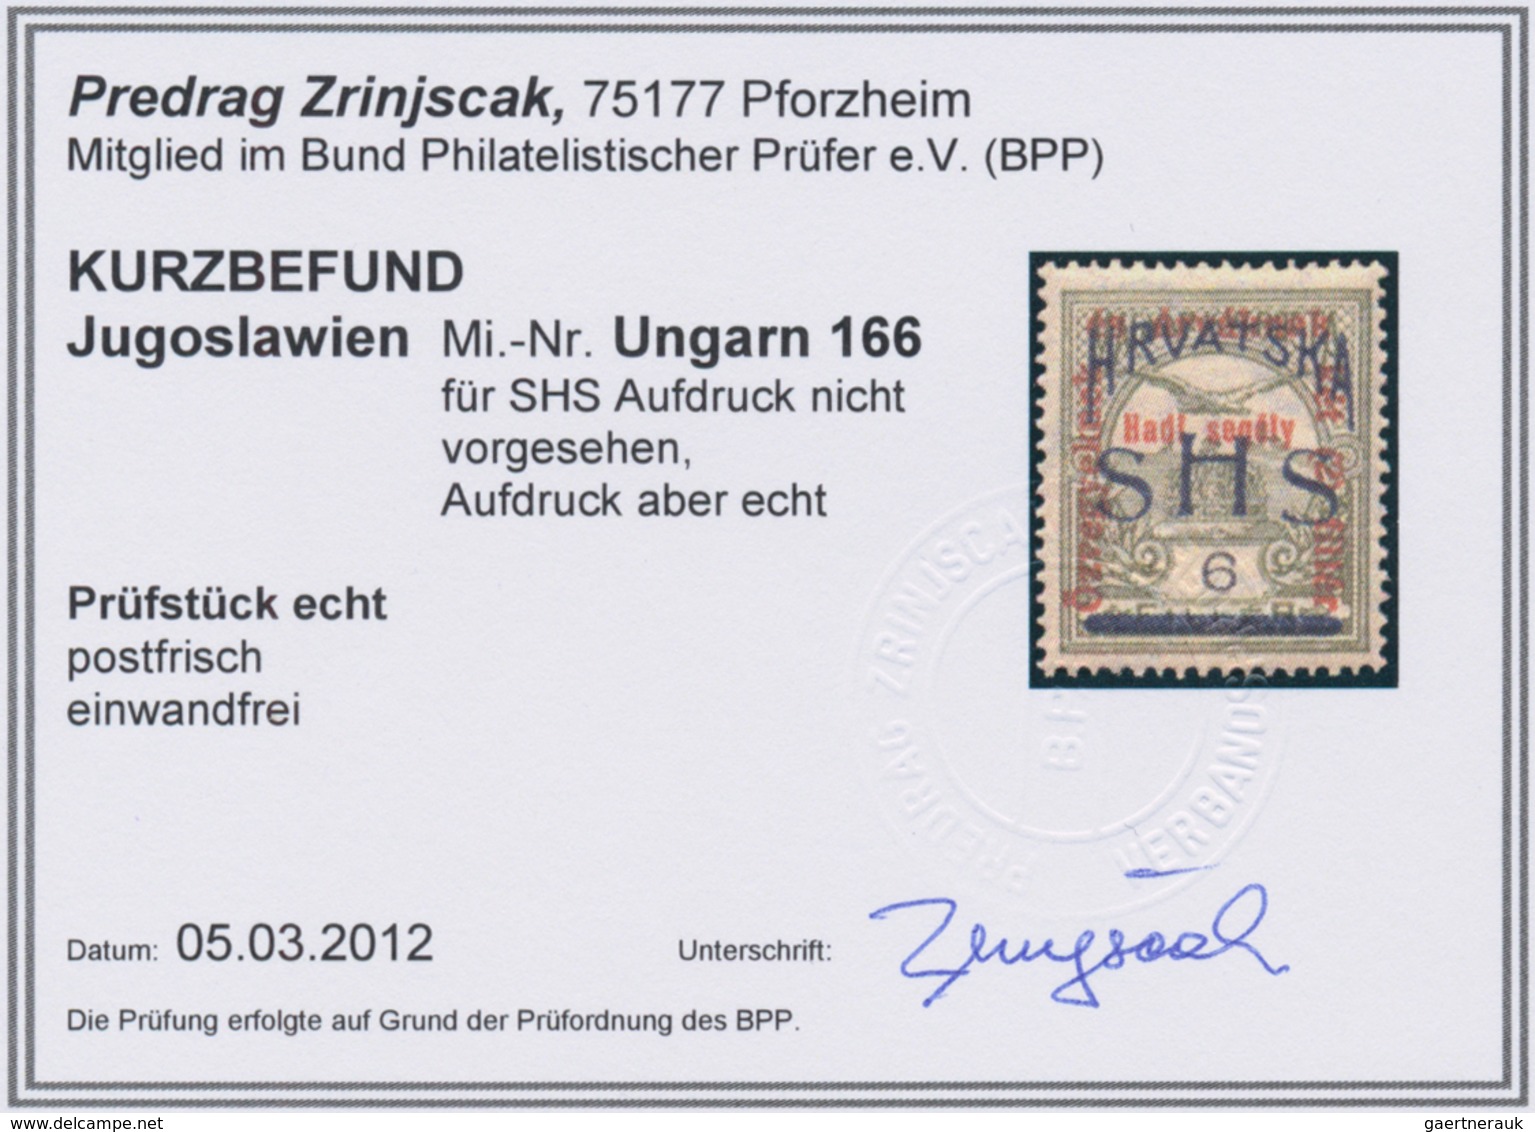 Jugoslawien: 1918, SHS overprints, issued overprint in blue applied on Hungary War charity stamps, g